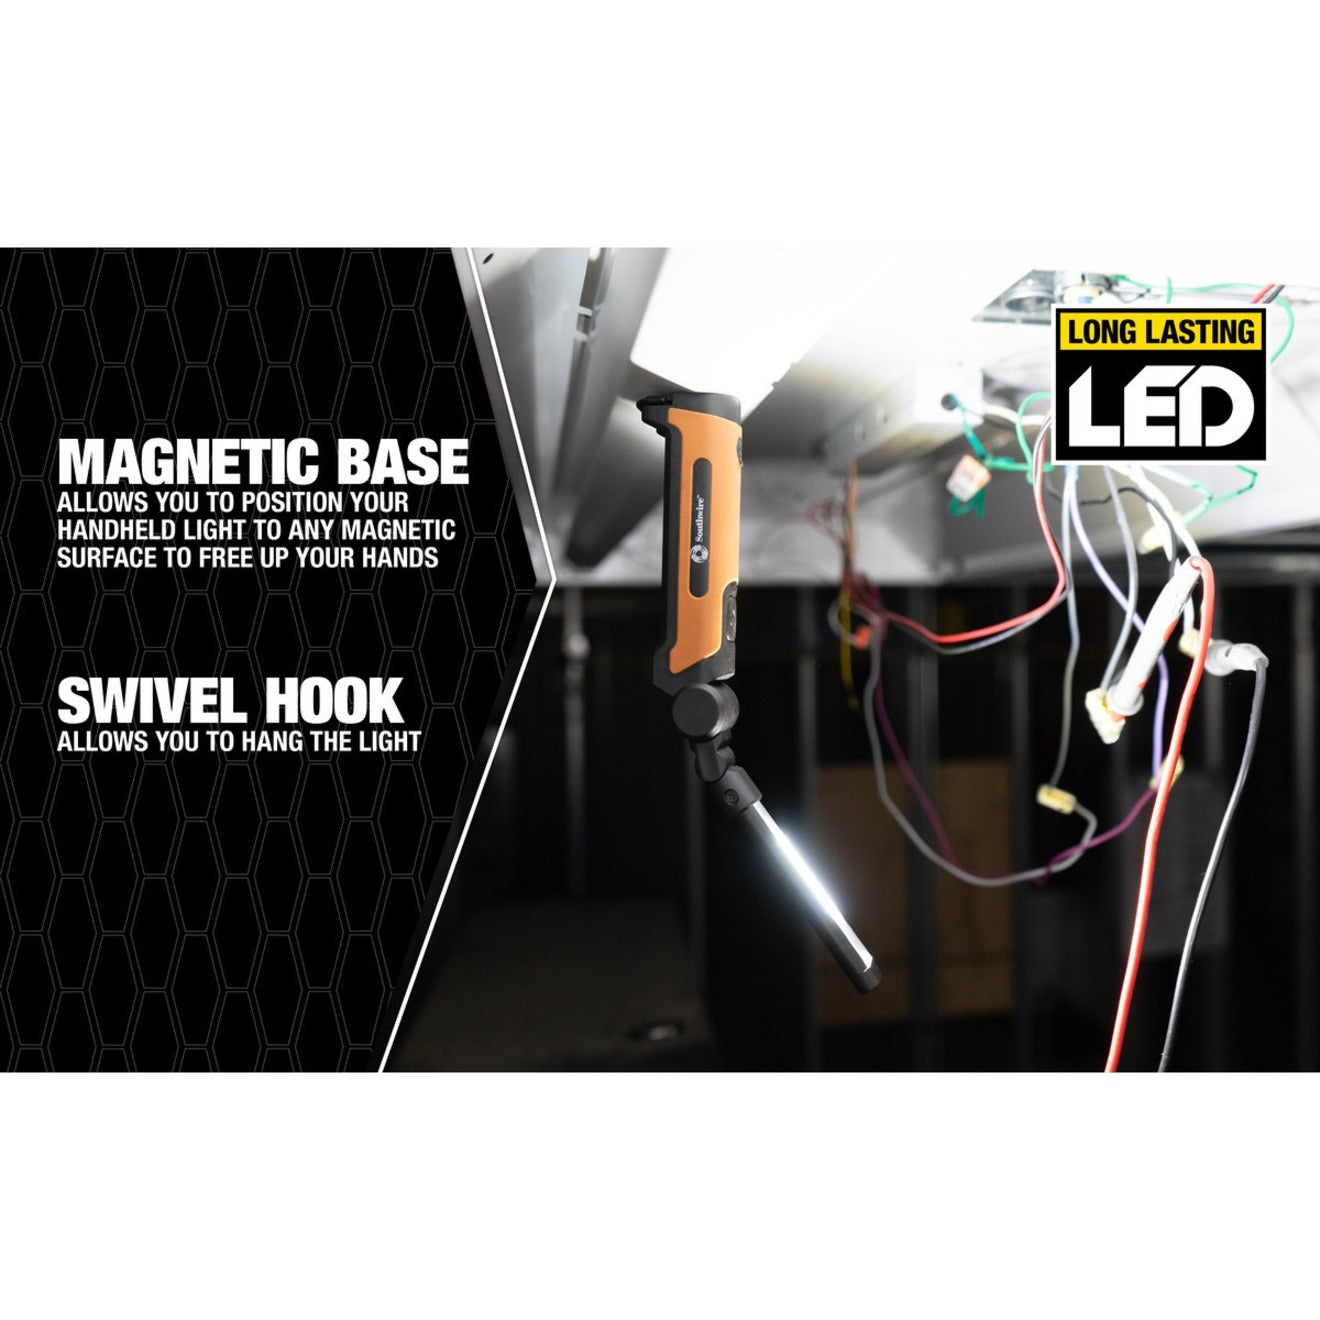 Southwire SL20RSW 200 Lumen LED Folding Light, Drop Resistant, Battery Powered